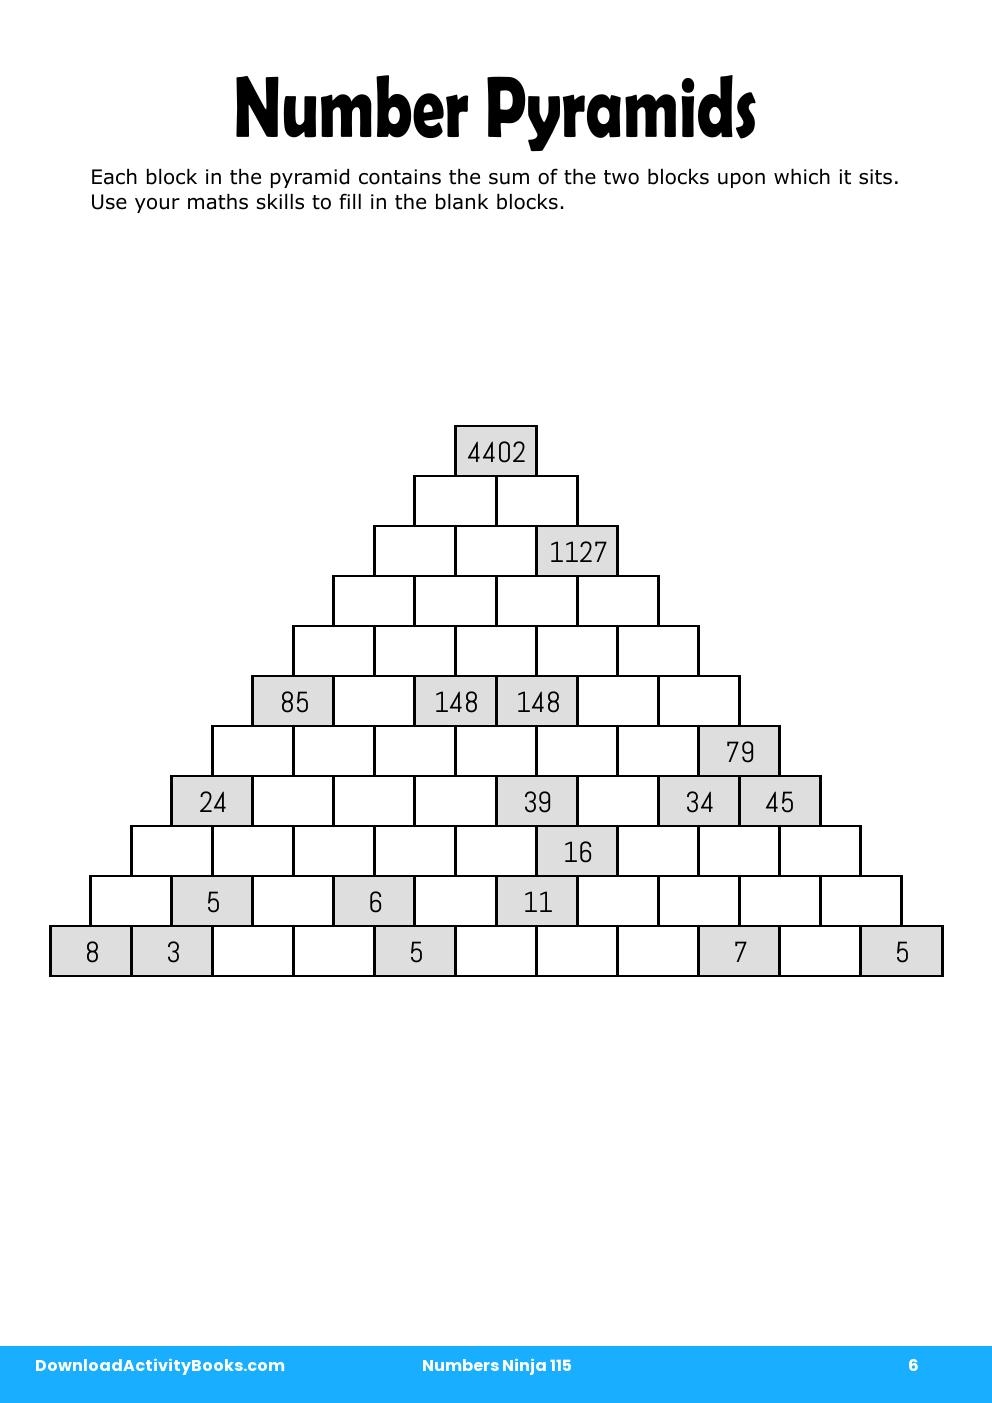 Number Pyramids in Numbers Ninja 115